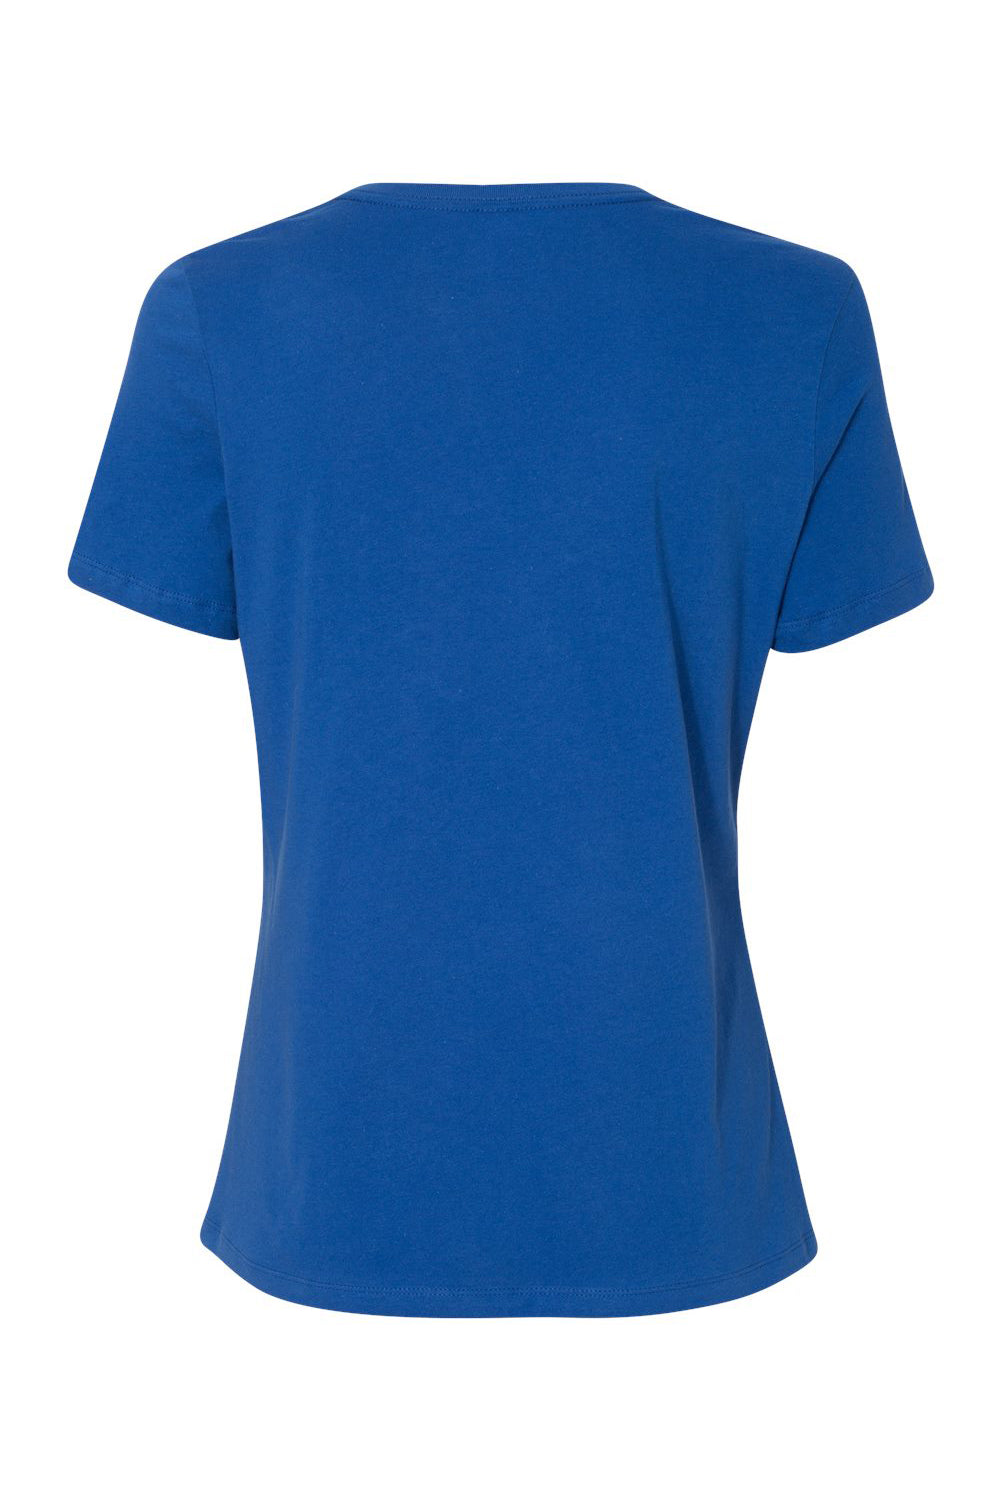 Bella + Canvas BC6400/B6400/6400 Womens Relaxed Jersey Short Sleeve Crewneck T-Shirt True Royal Blue Flat Back